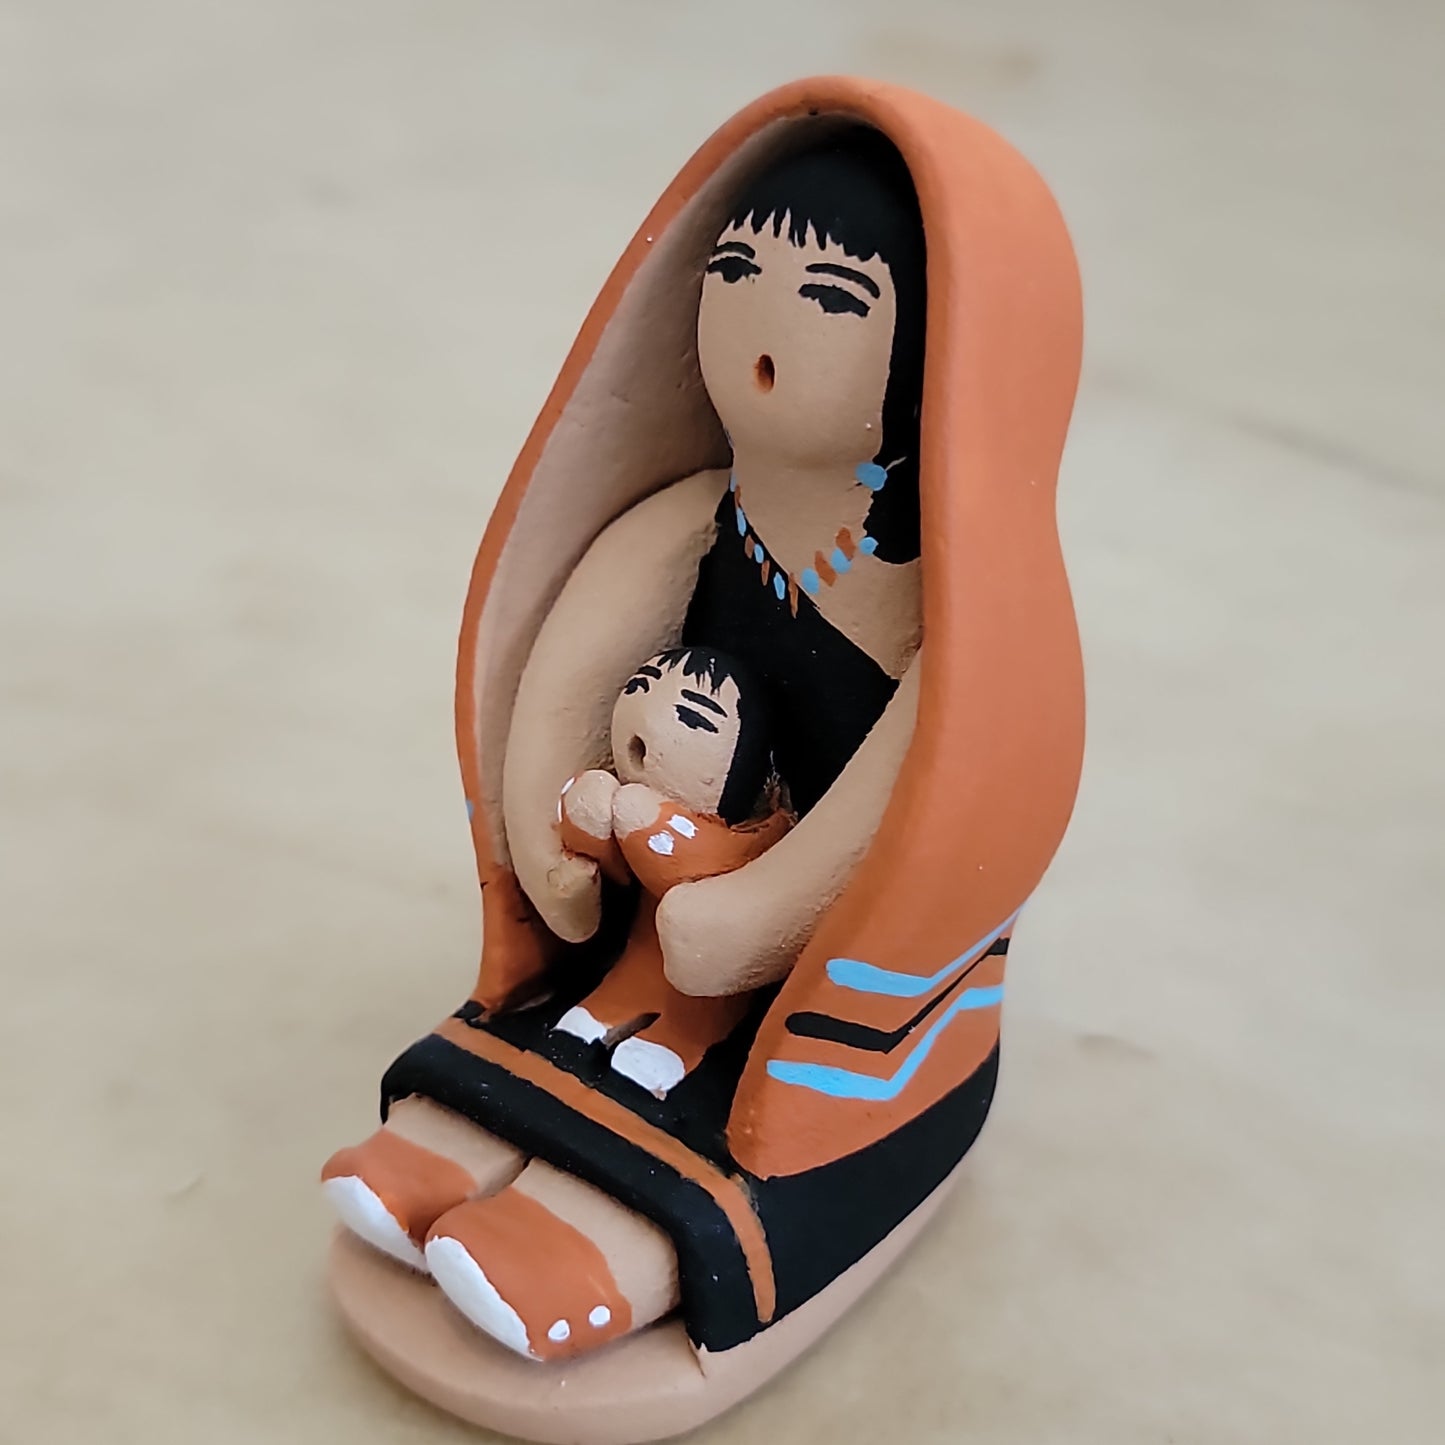 Angie Loretto Jemez Pueblo Pottery Storyteller w/One Baby and Shawl